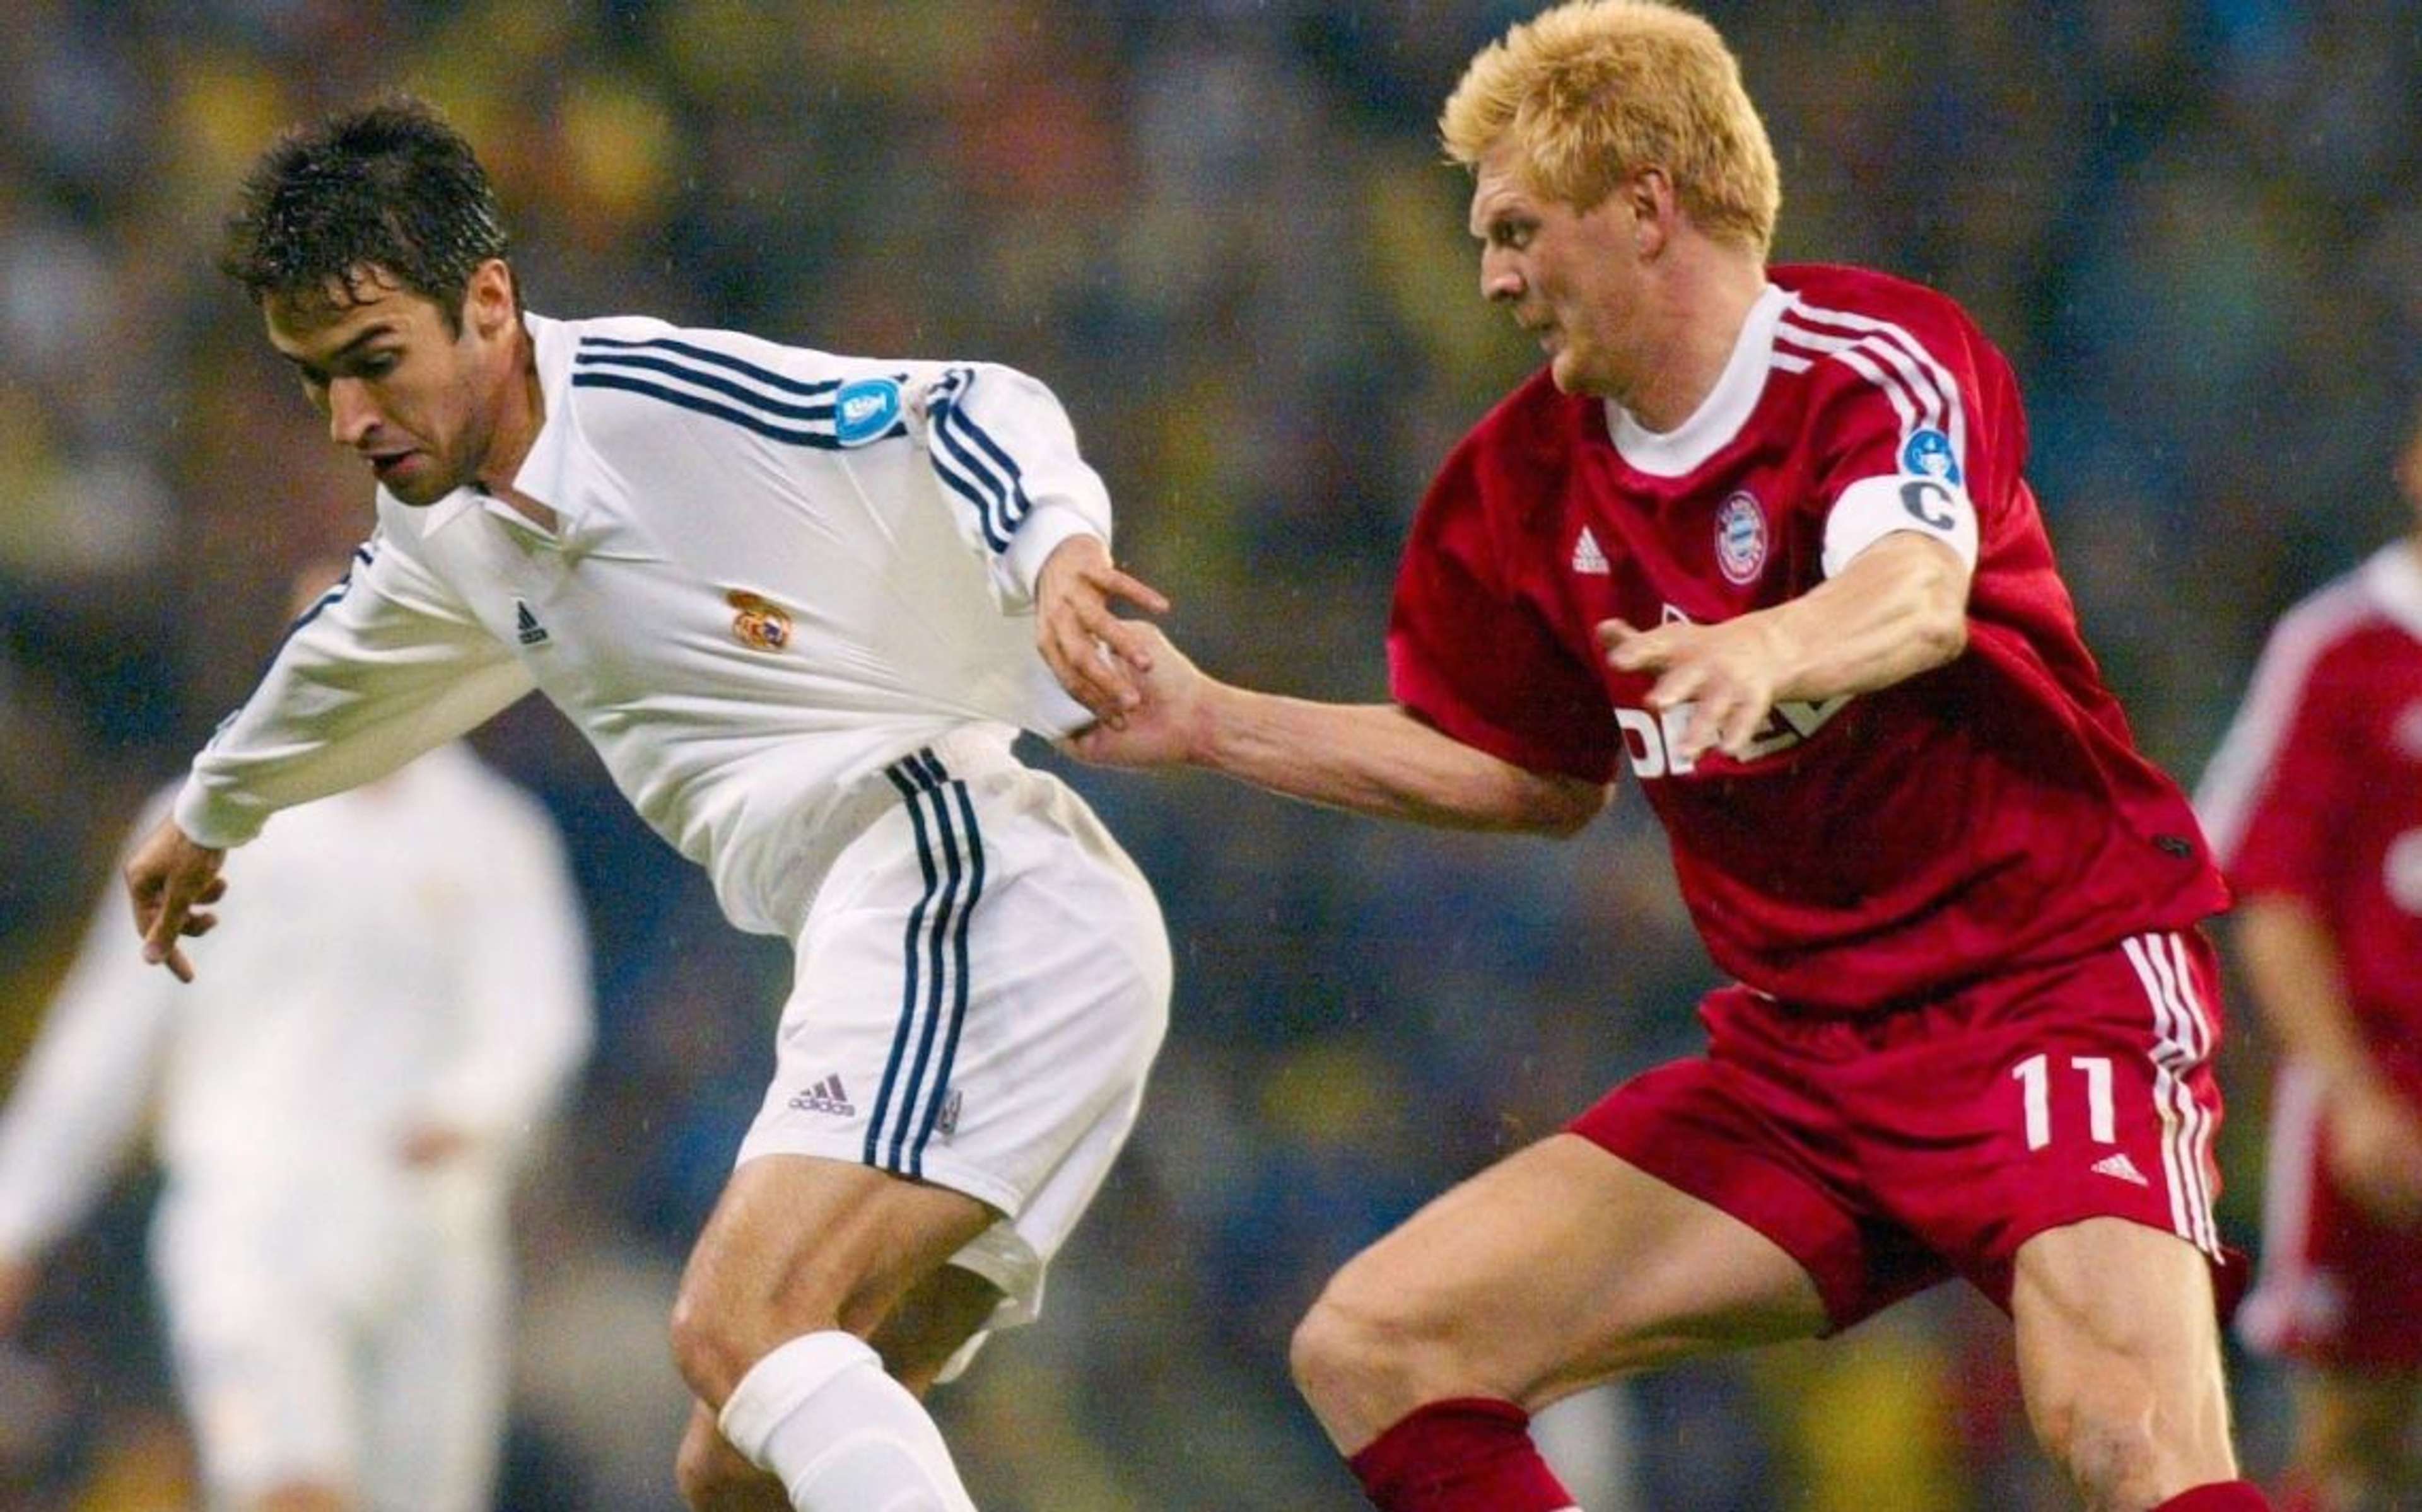 Stefan Effenberg im Zweikamp mit Raul, Real Madrid vs Bayern 2001/02